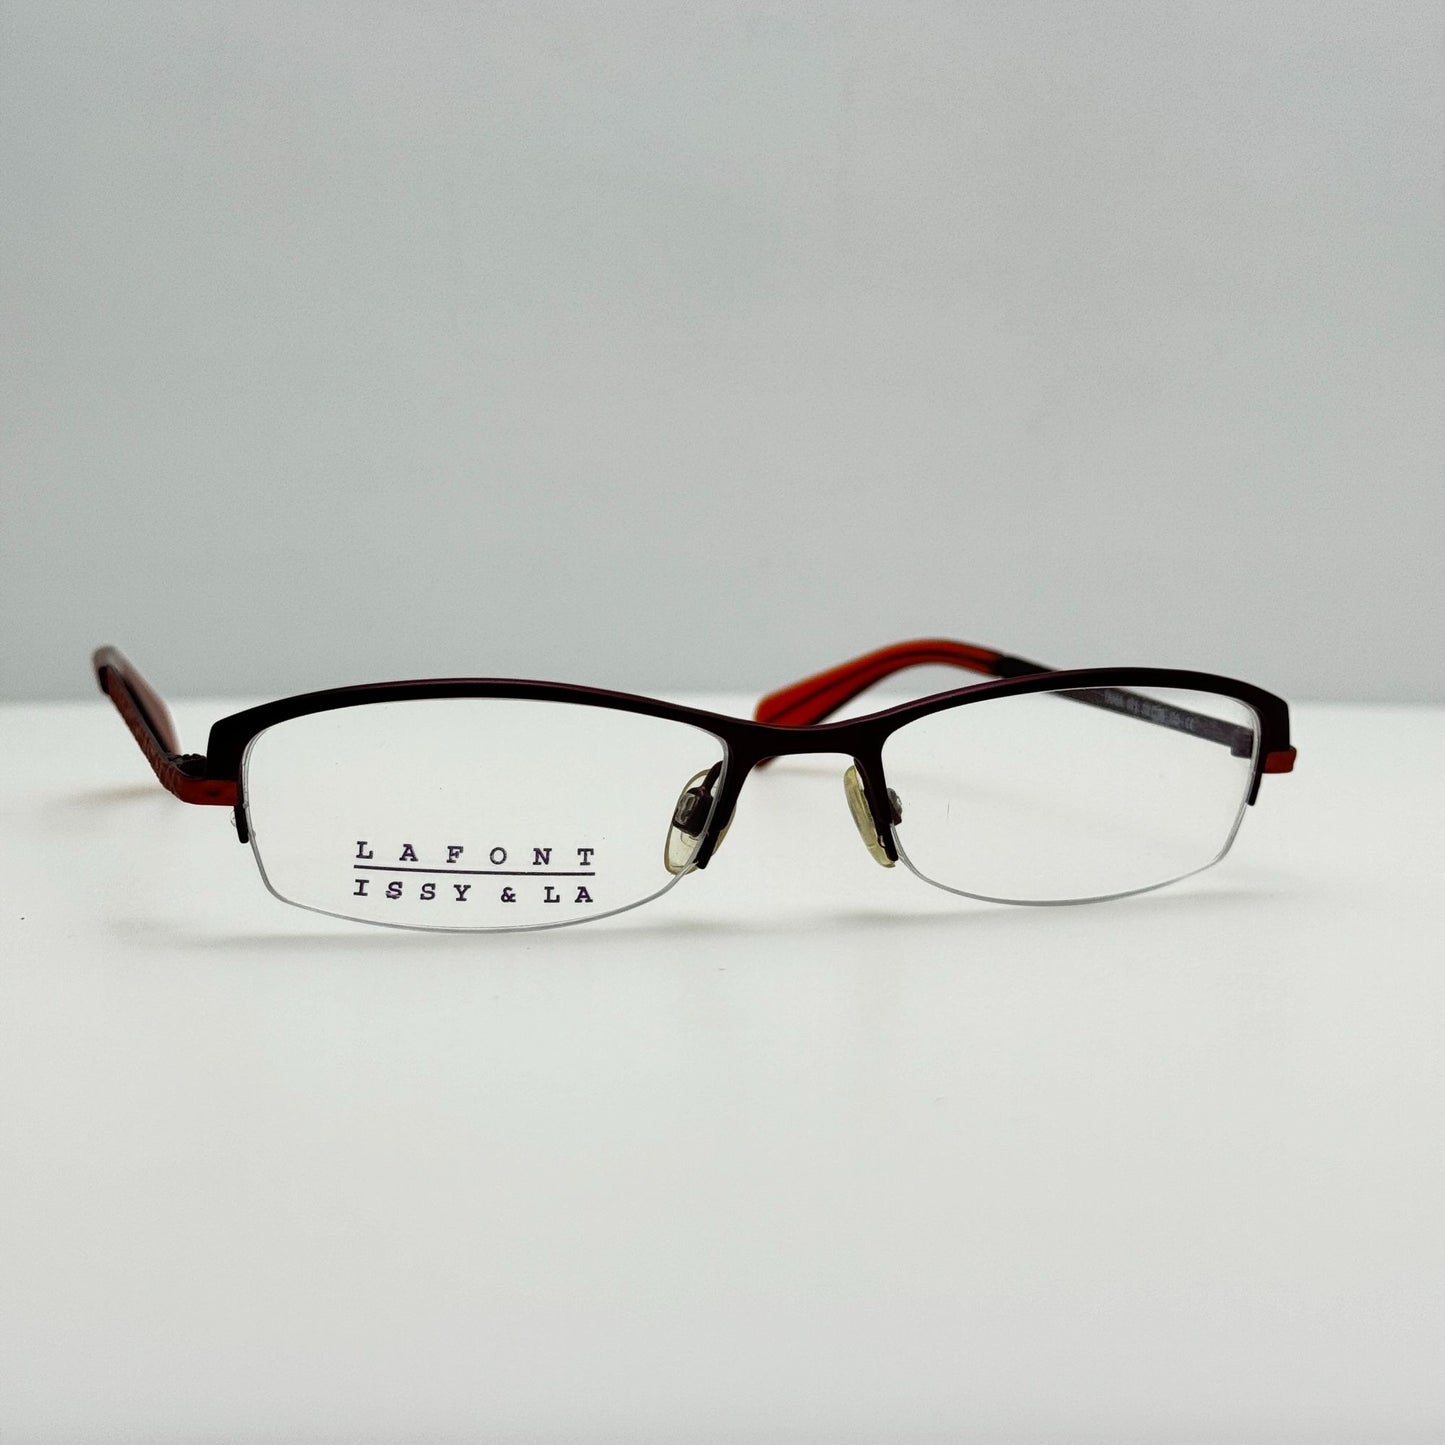 Jean Lafont Eyeglasses Eye Glasses Frames Tania 671 France 52-16-135